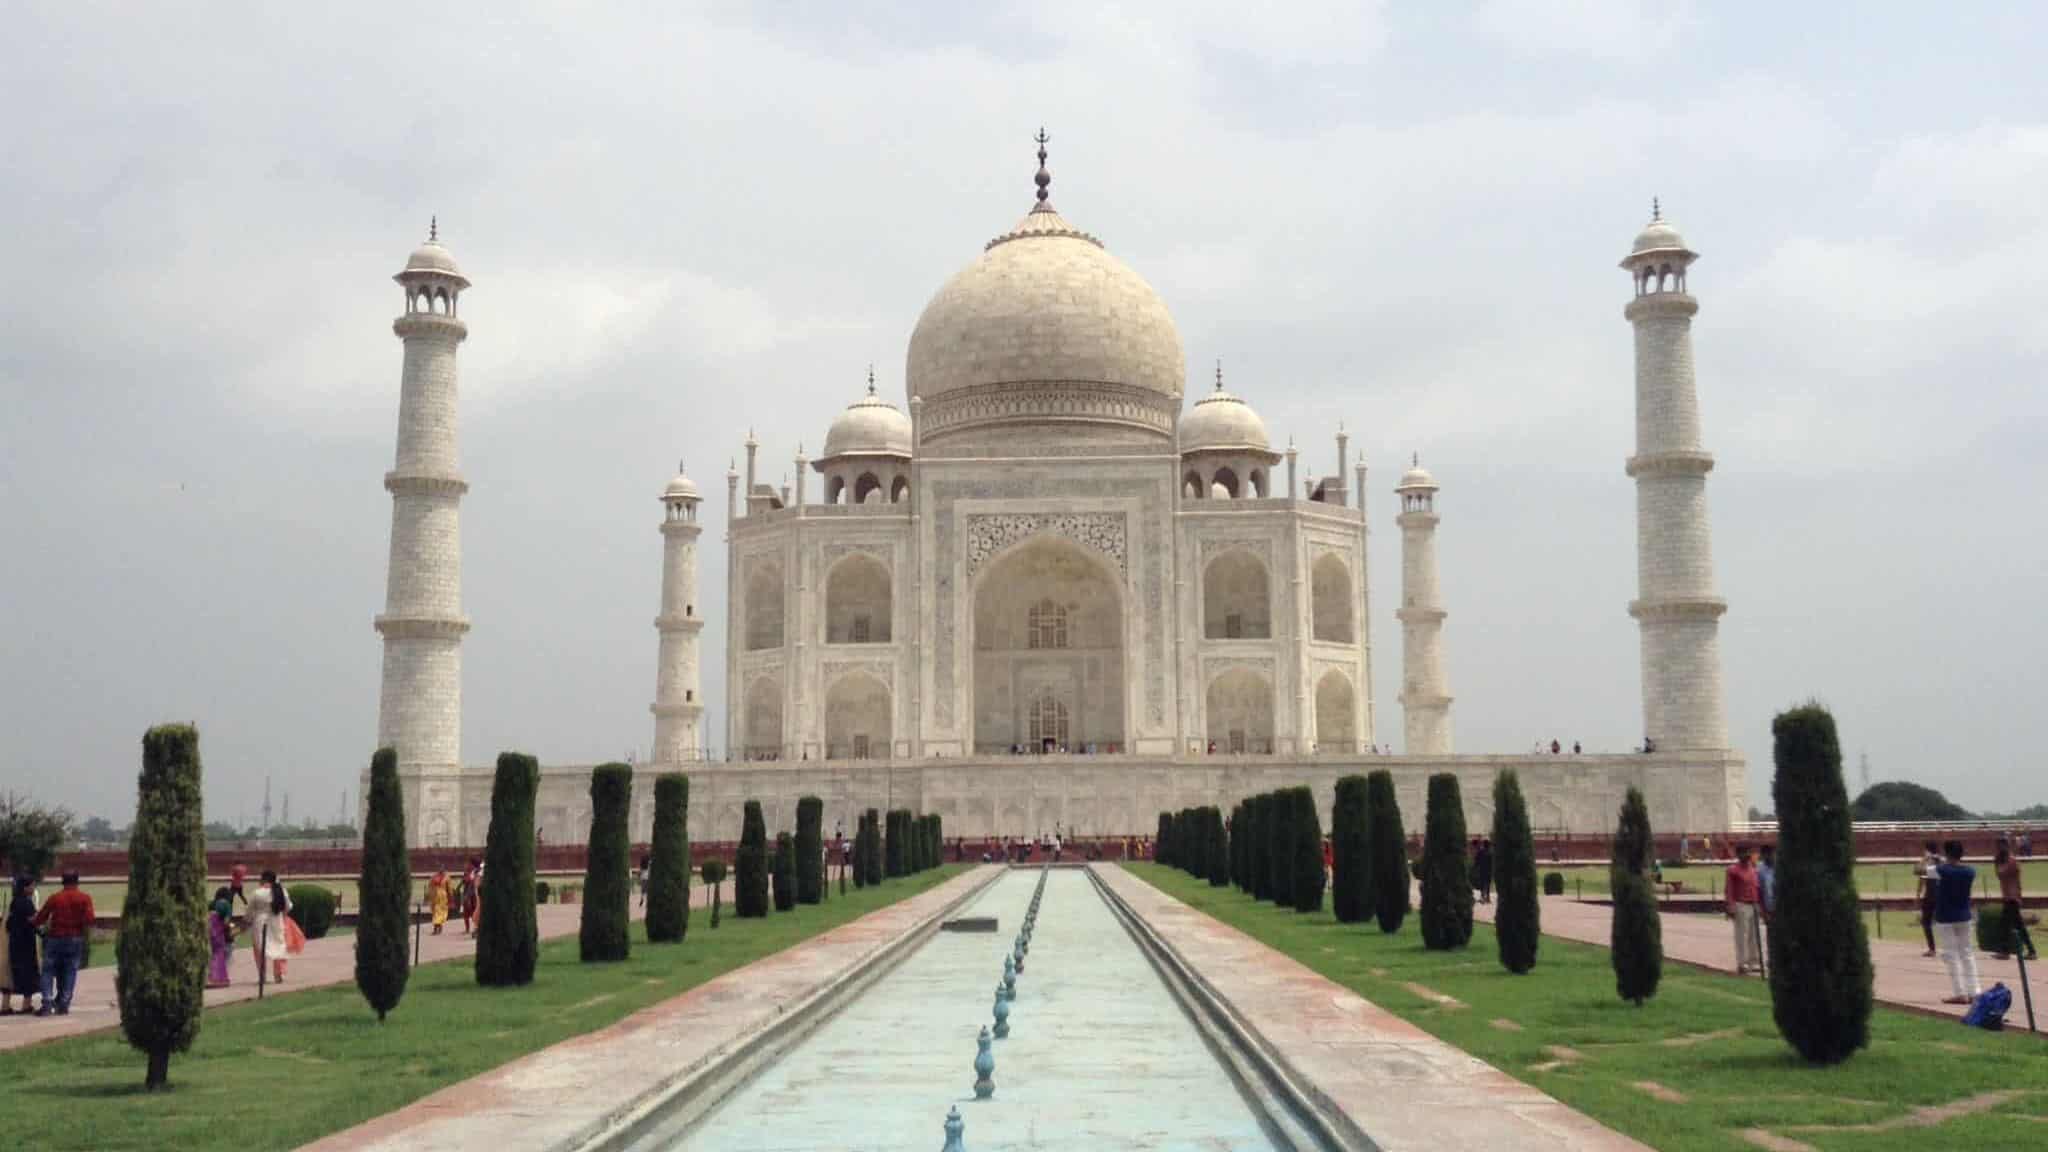 Central views of the Taj Mahal in Agra, India